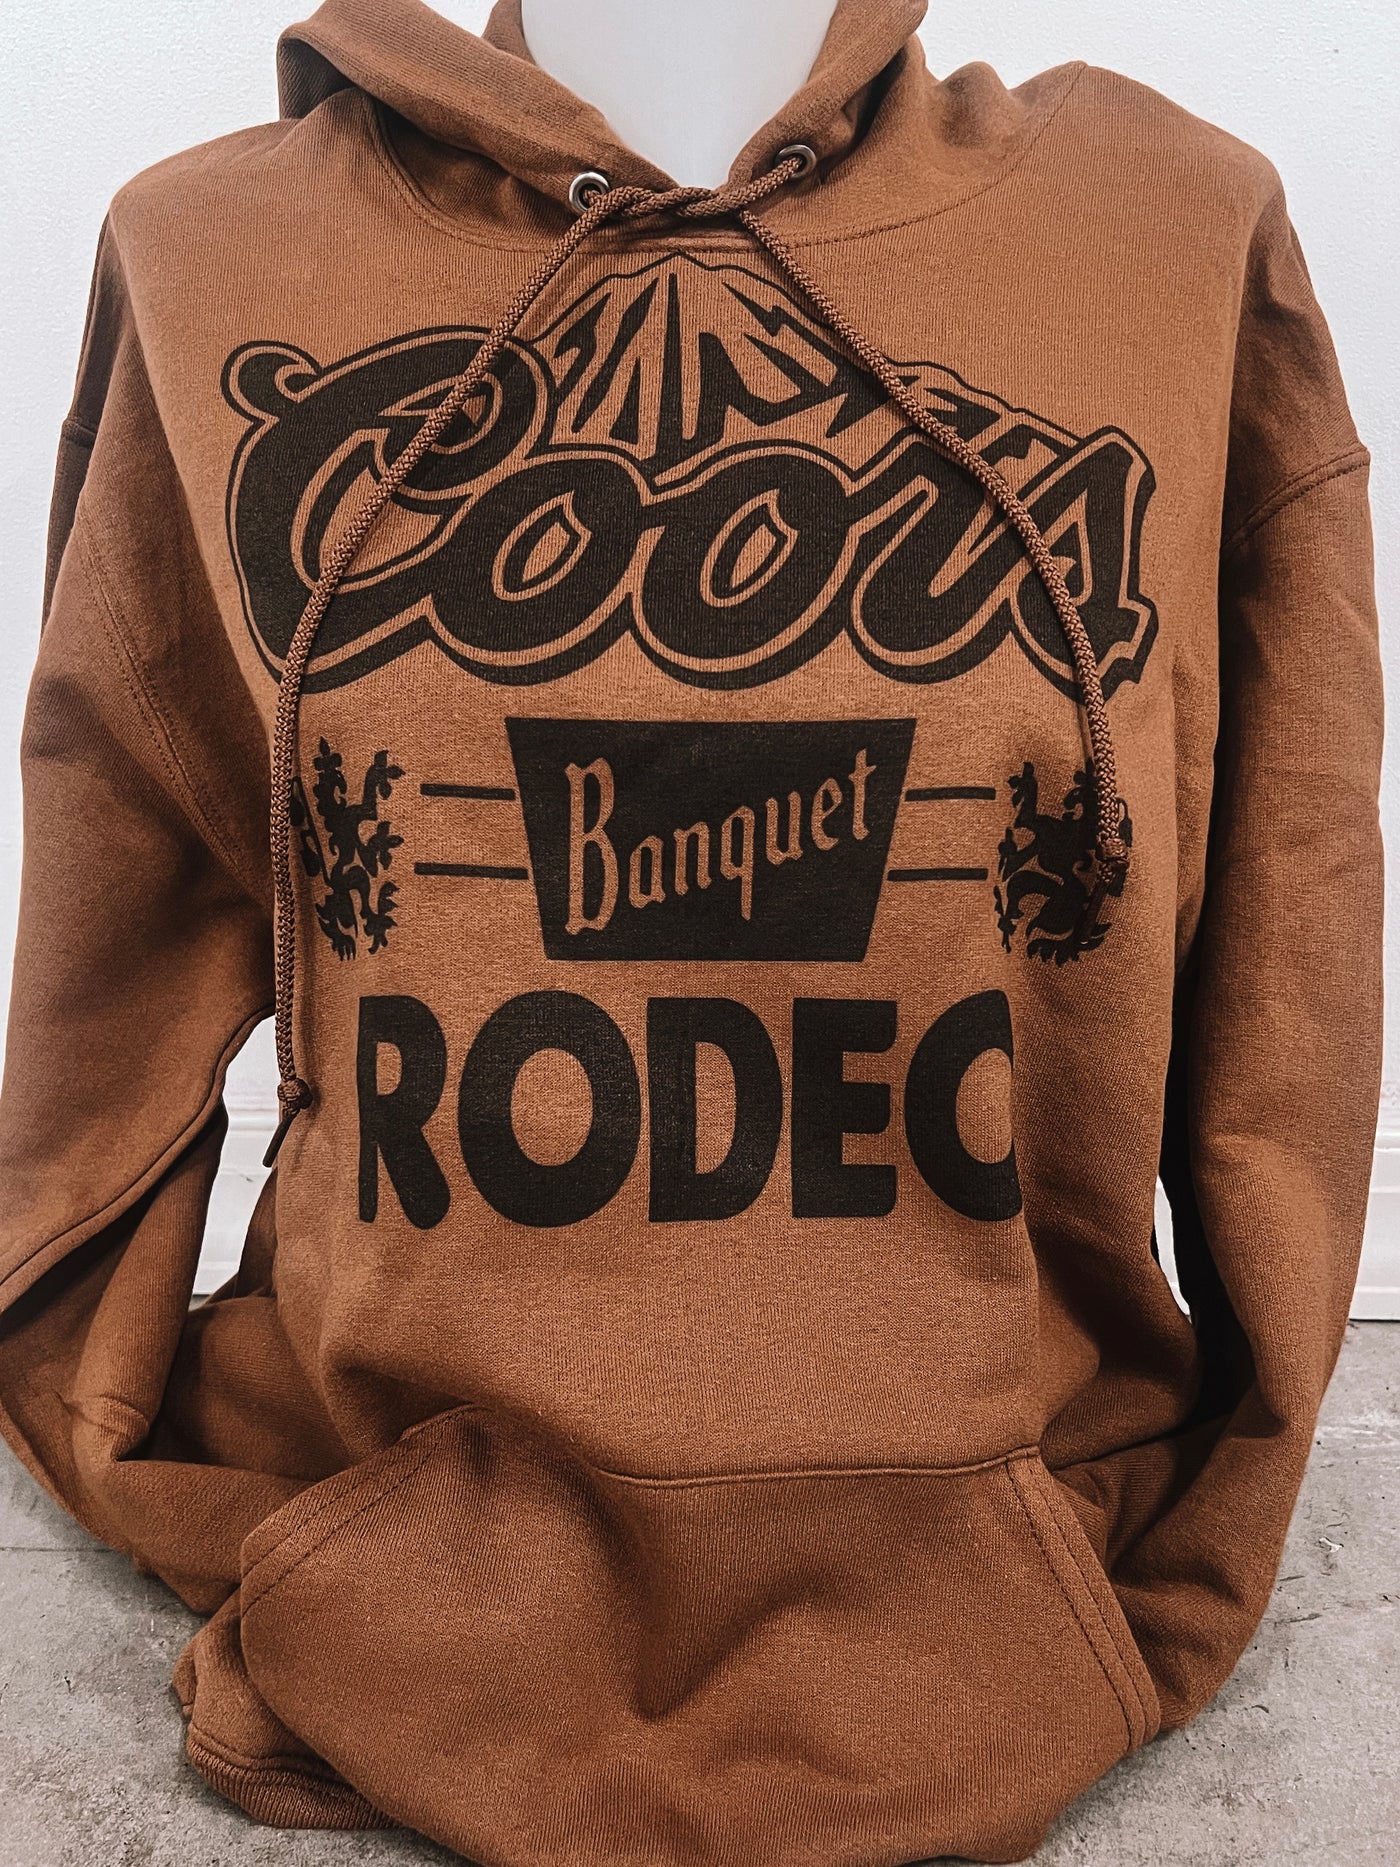 Rustic Coors Rodeo Tee/Sweatshirt